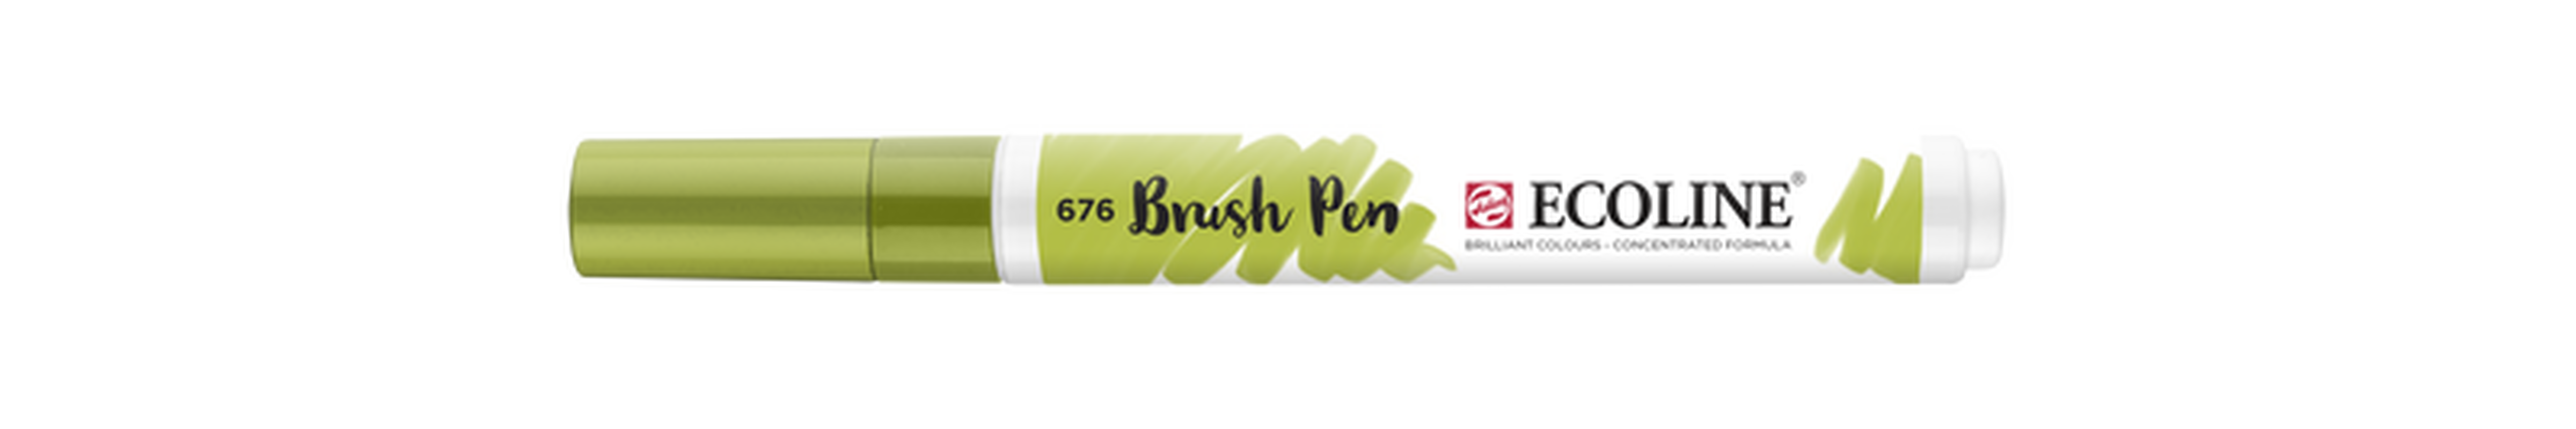 Talens Brush Pen Ecoline Number 676 Color Grass Green